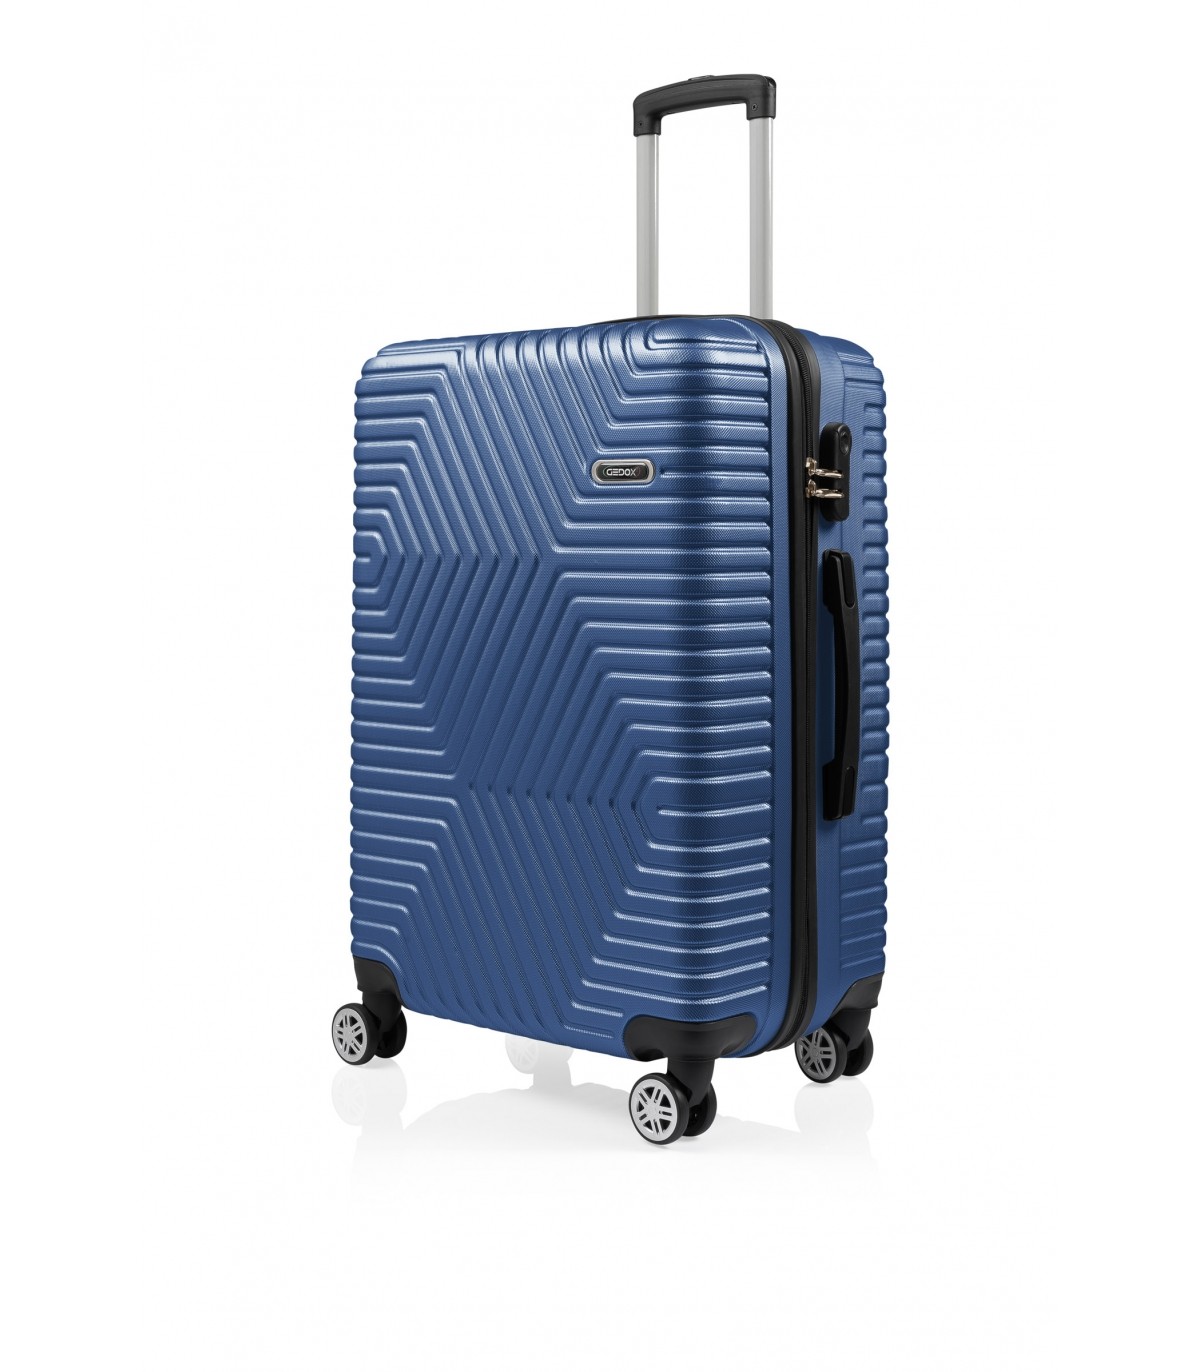 Gedox GDX600 Abs Plastik, Orta Boy Çekçekli Seyahat Valizi - Çivit Mavi